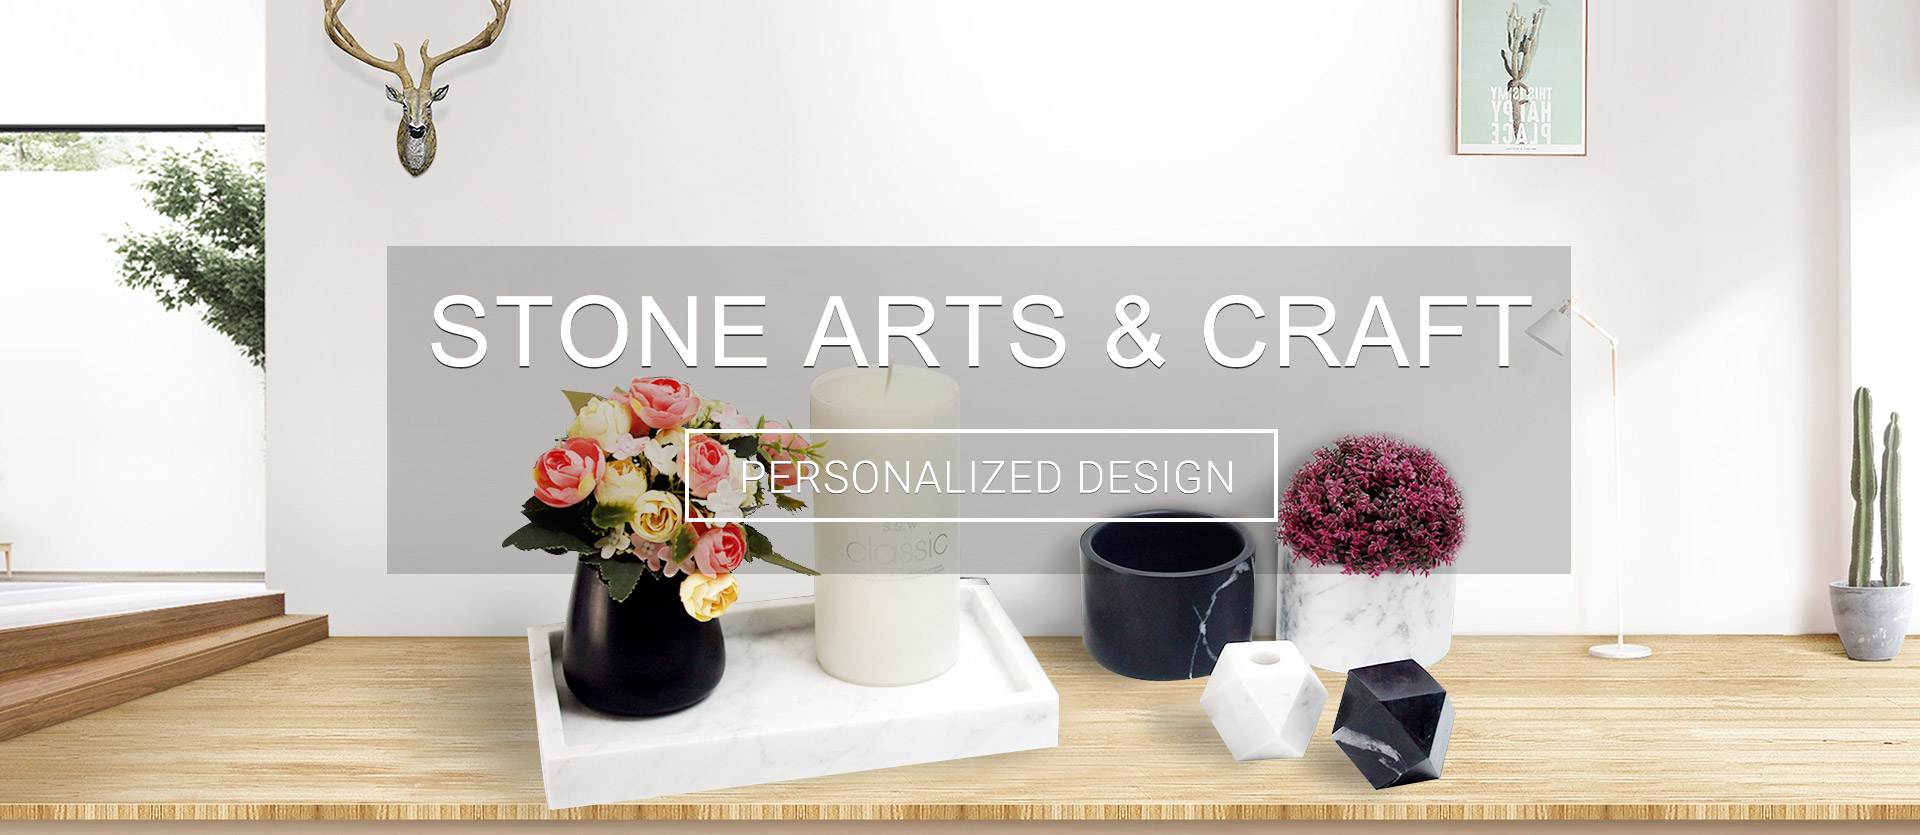 Stone Arts & Craft 